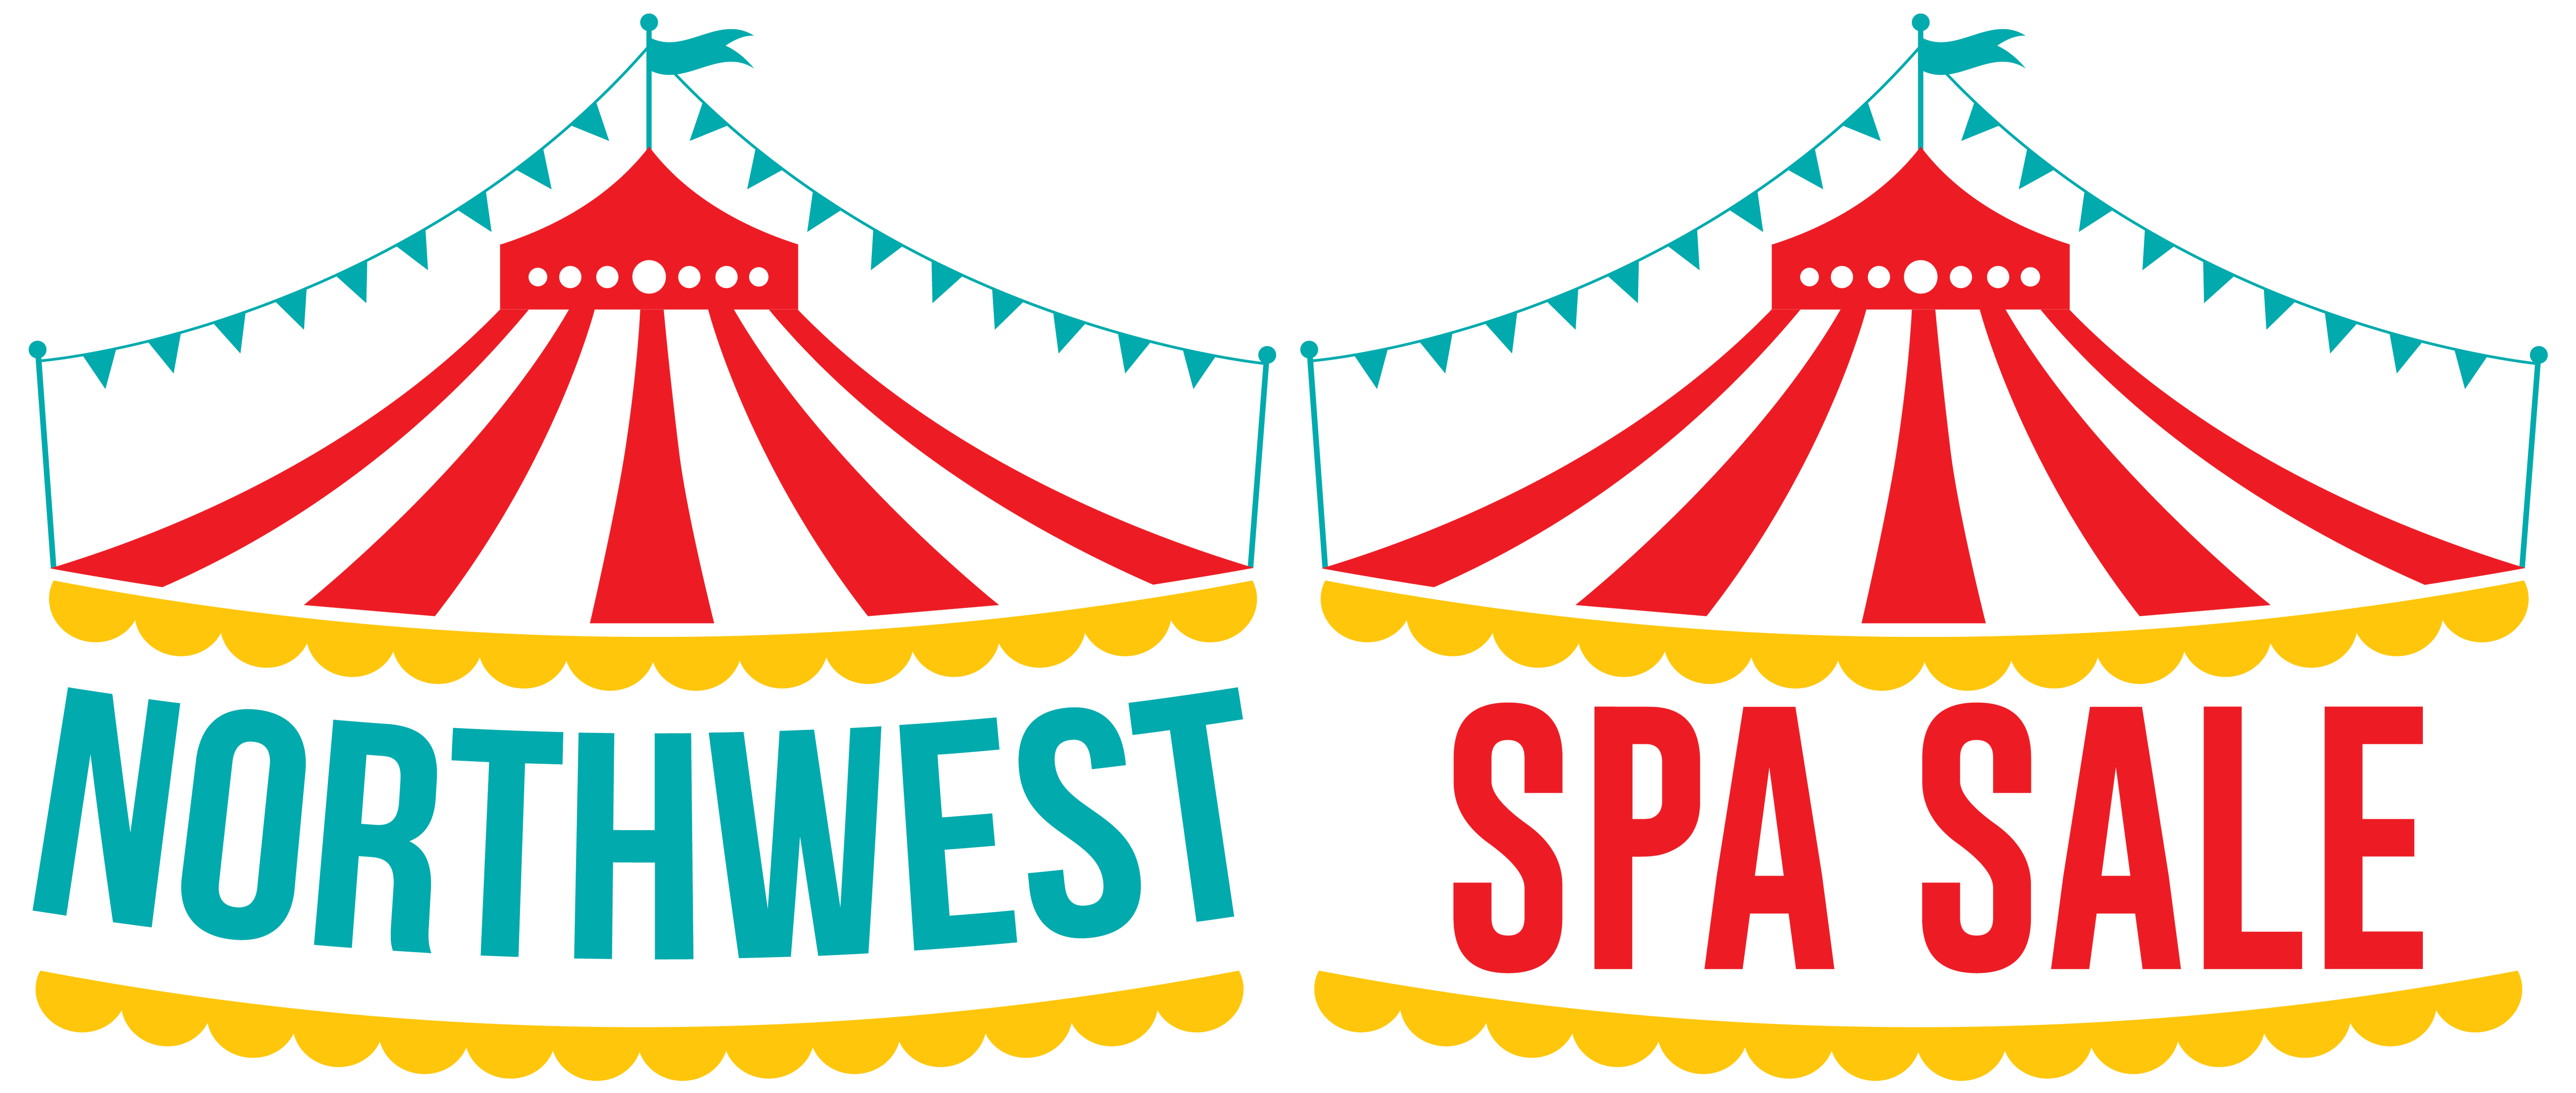 northwest spa sale